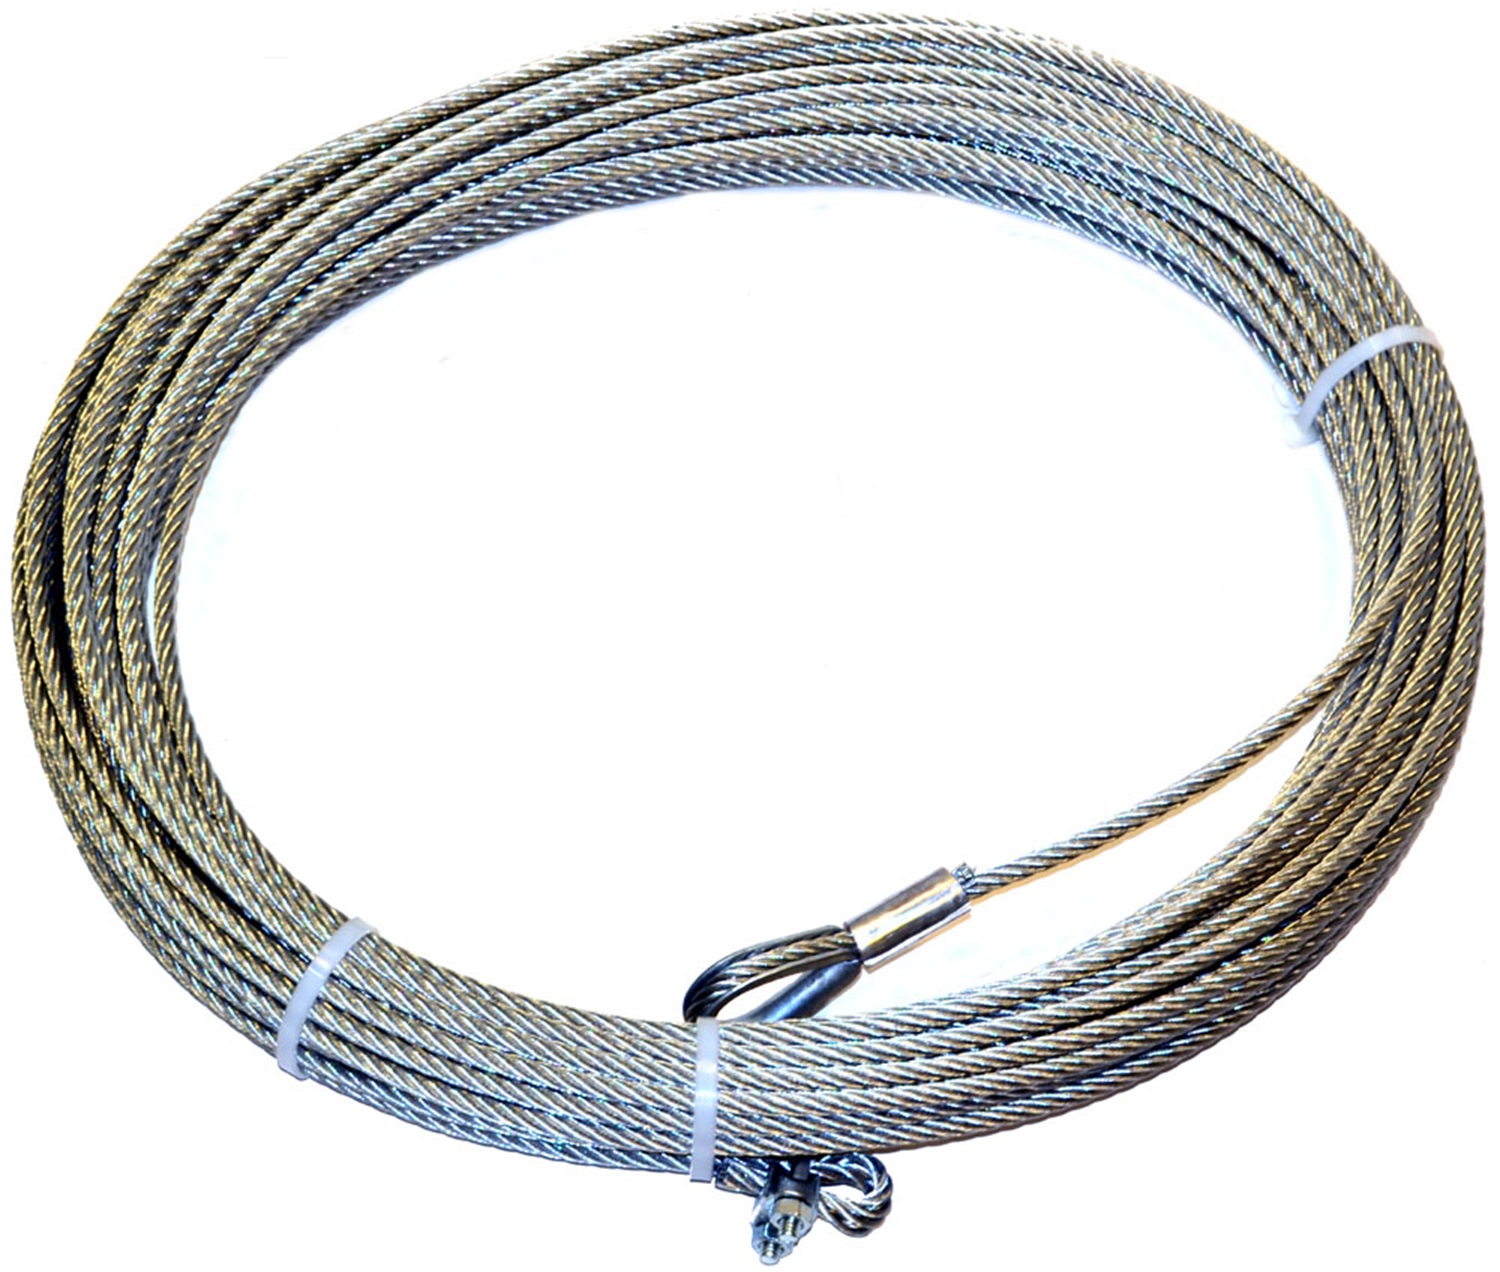 Warn Warn 38311 Wire Rope